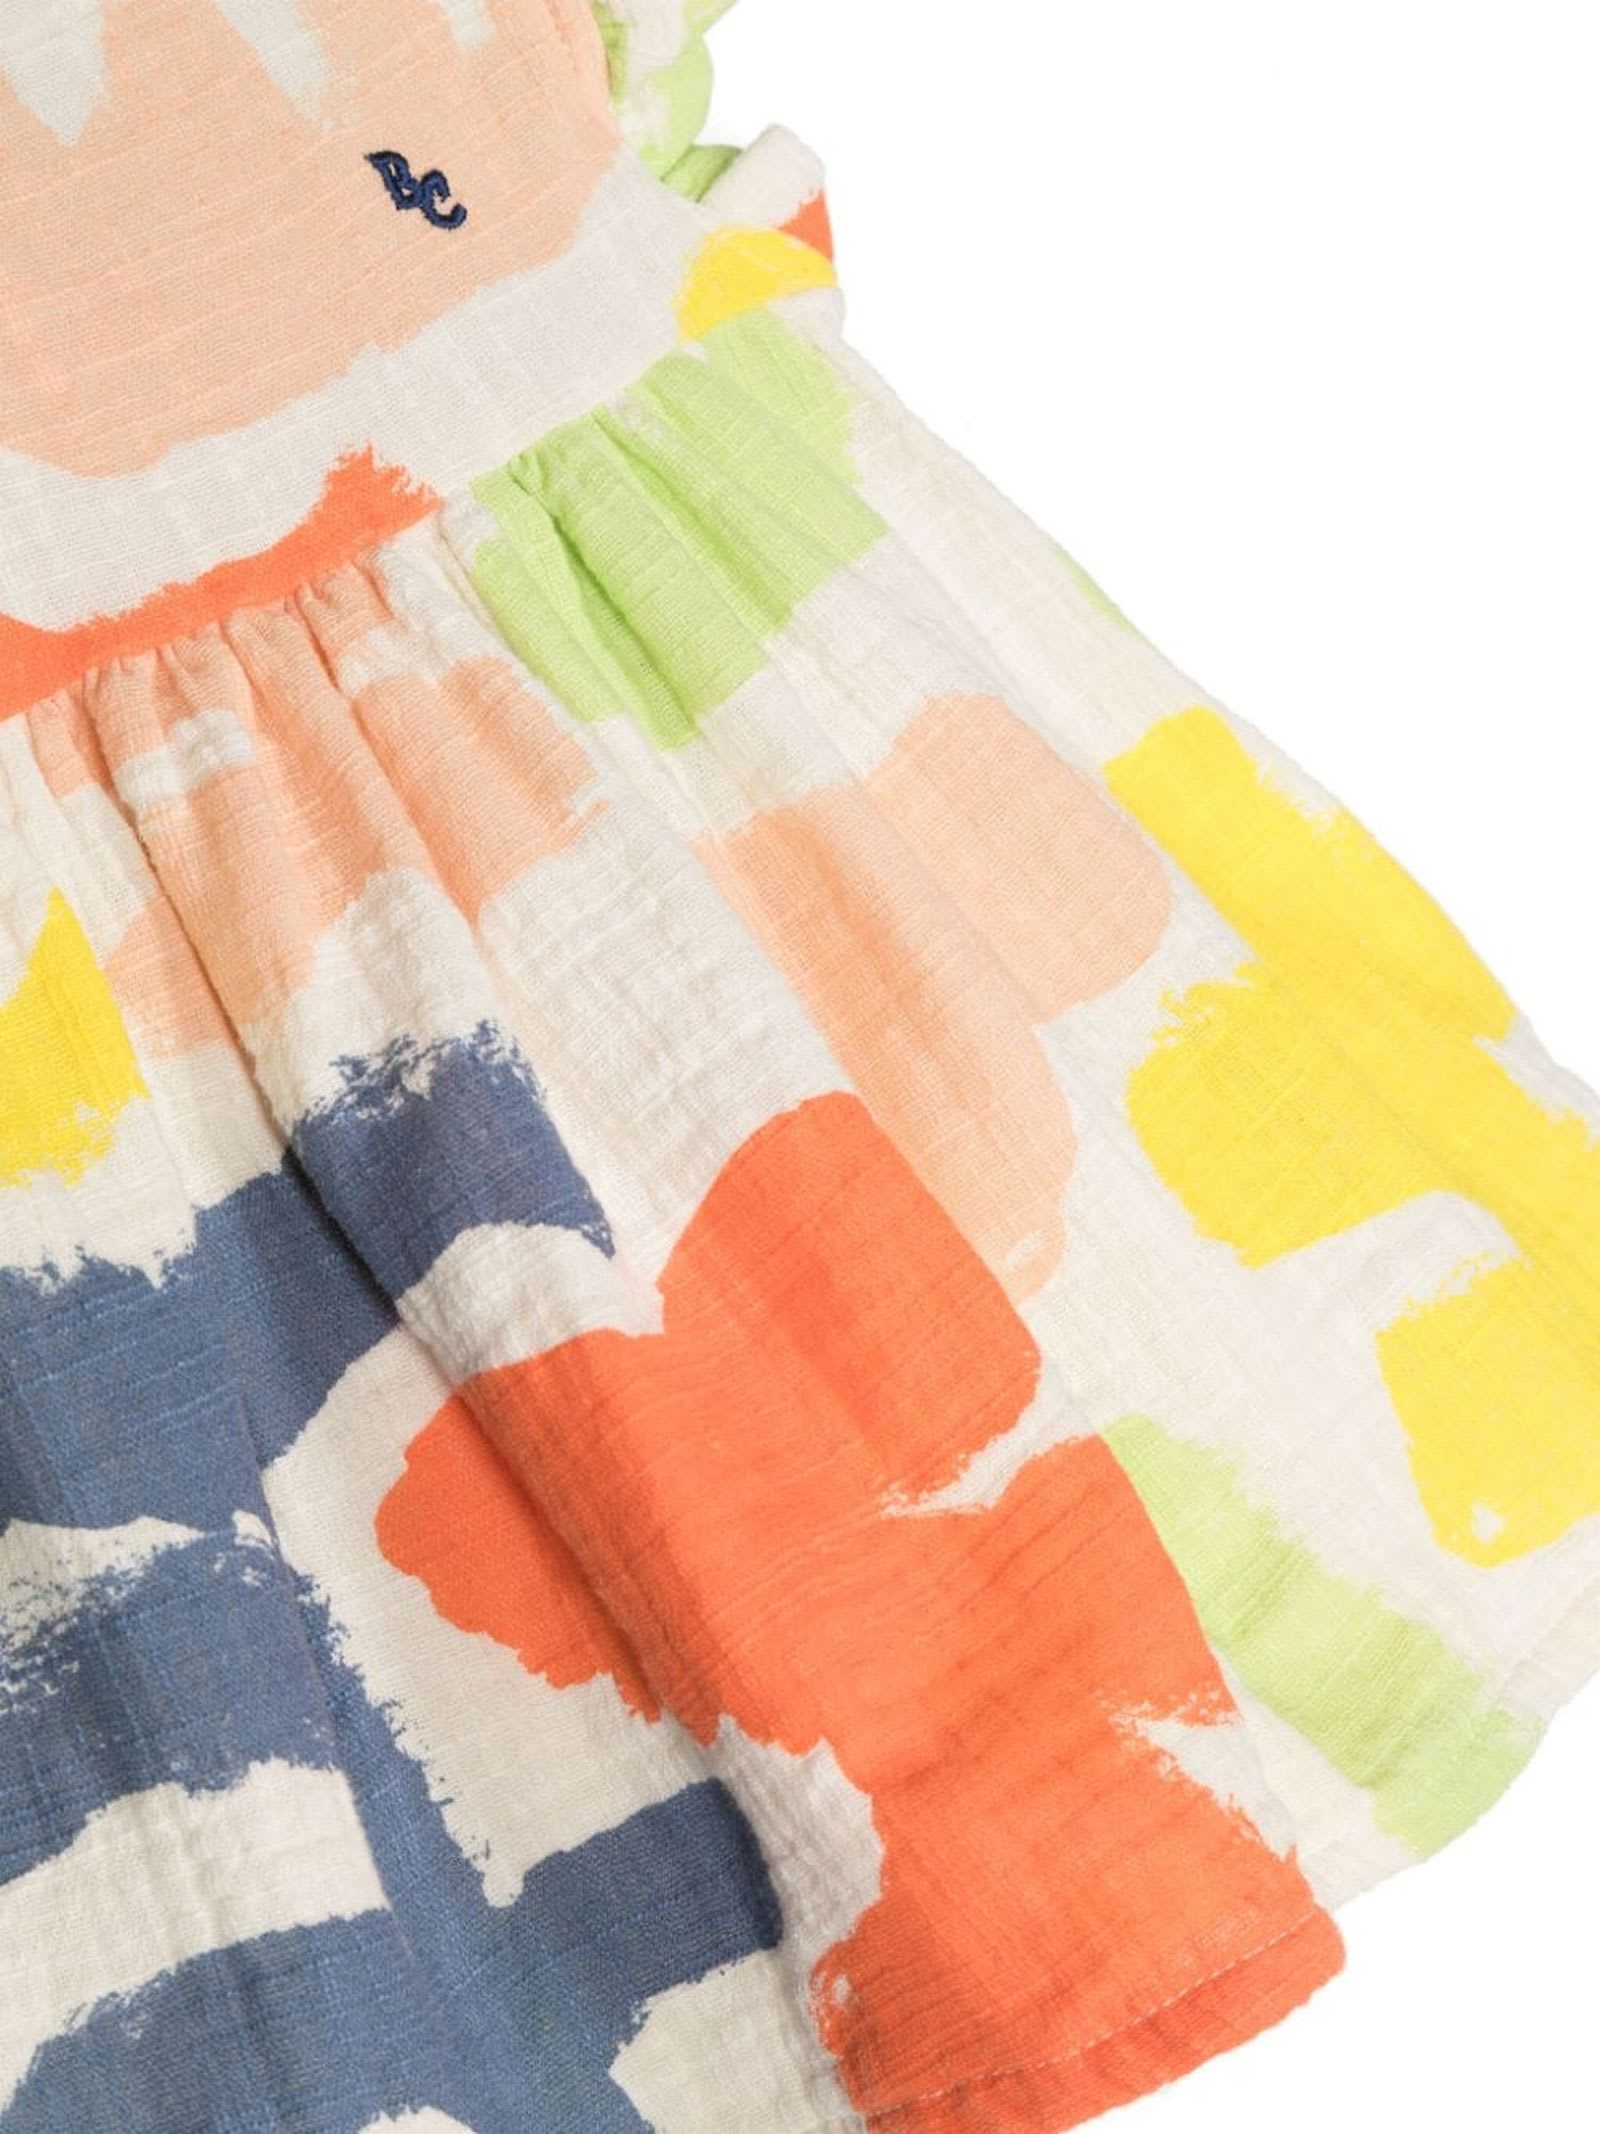 Shop Bobo Choses Dresses Multicolour